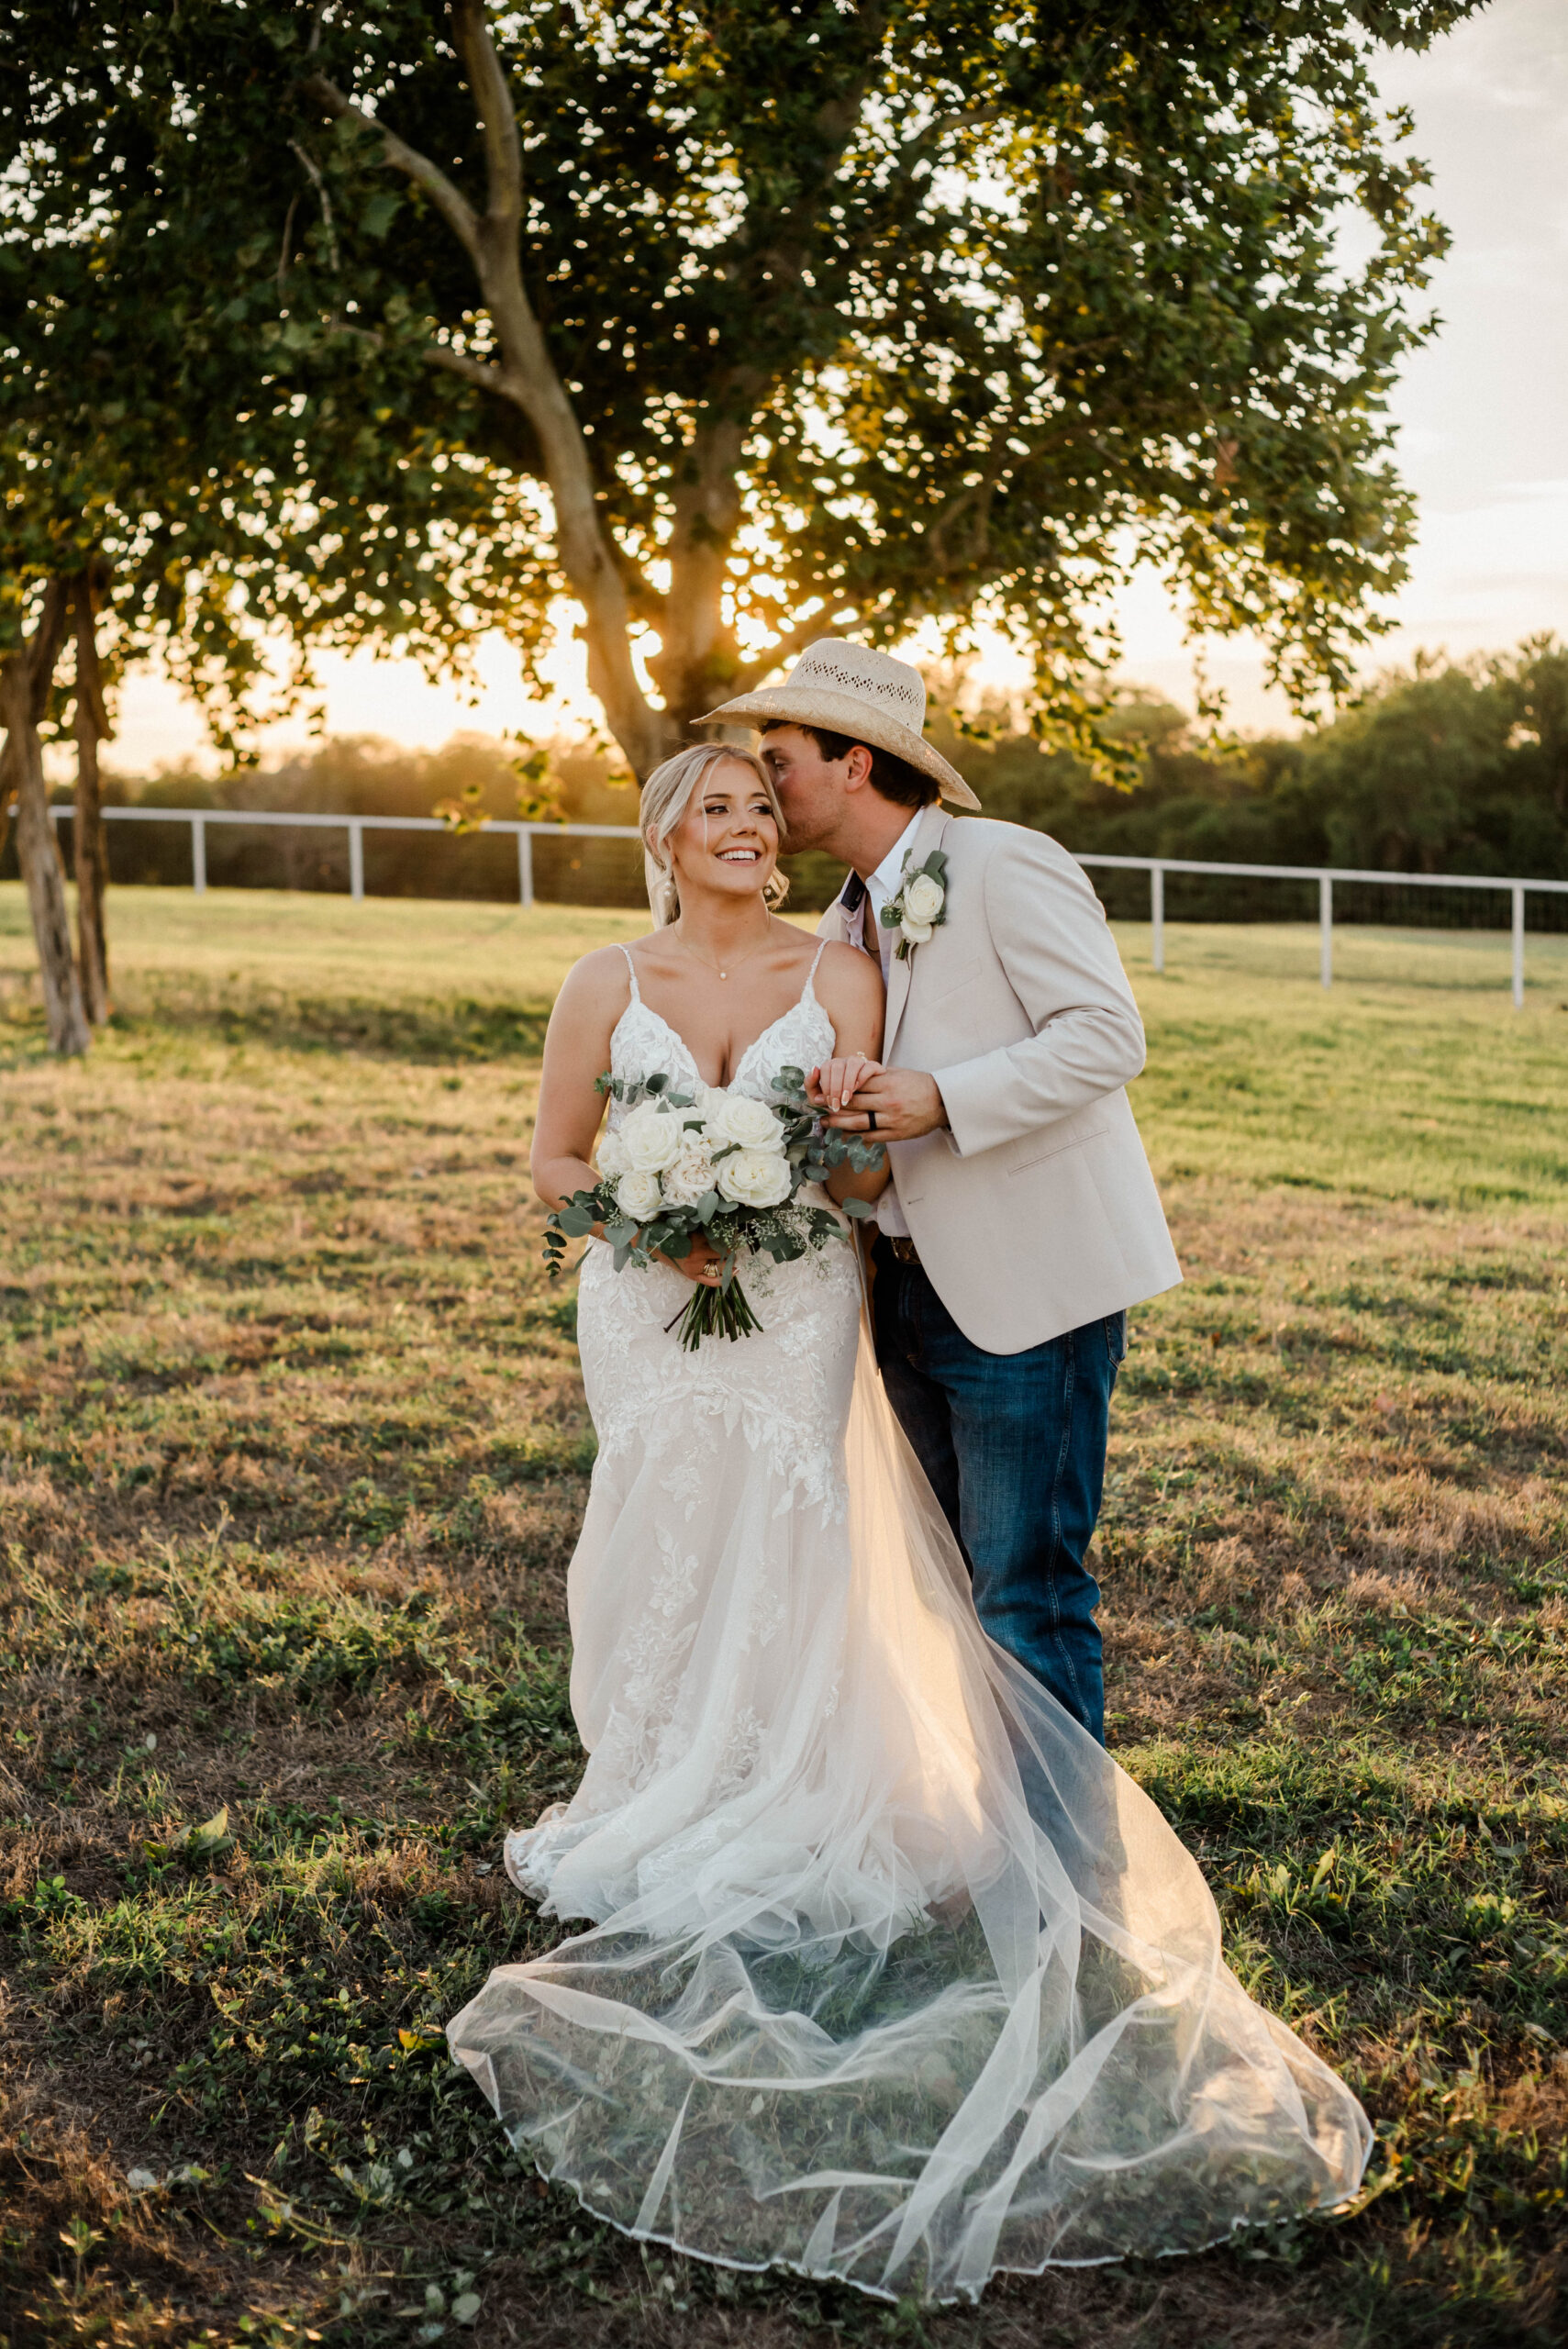 Faith and Garrett's Wedding in Cameron, Texas with Rachel Driskell Photography